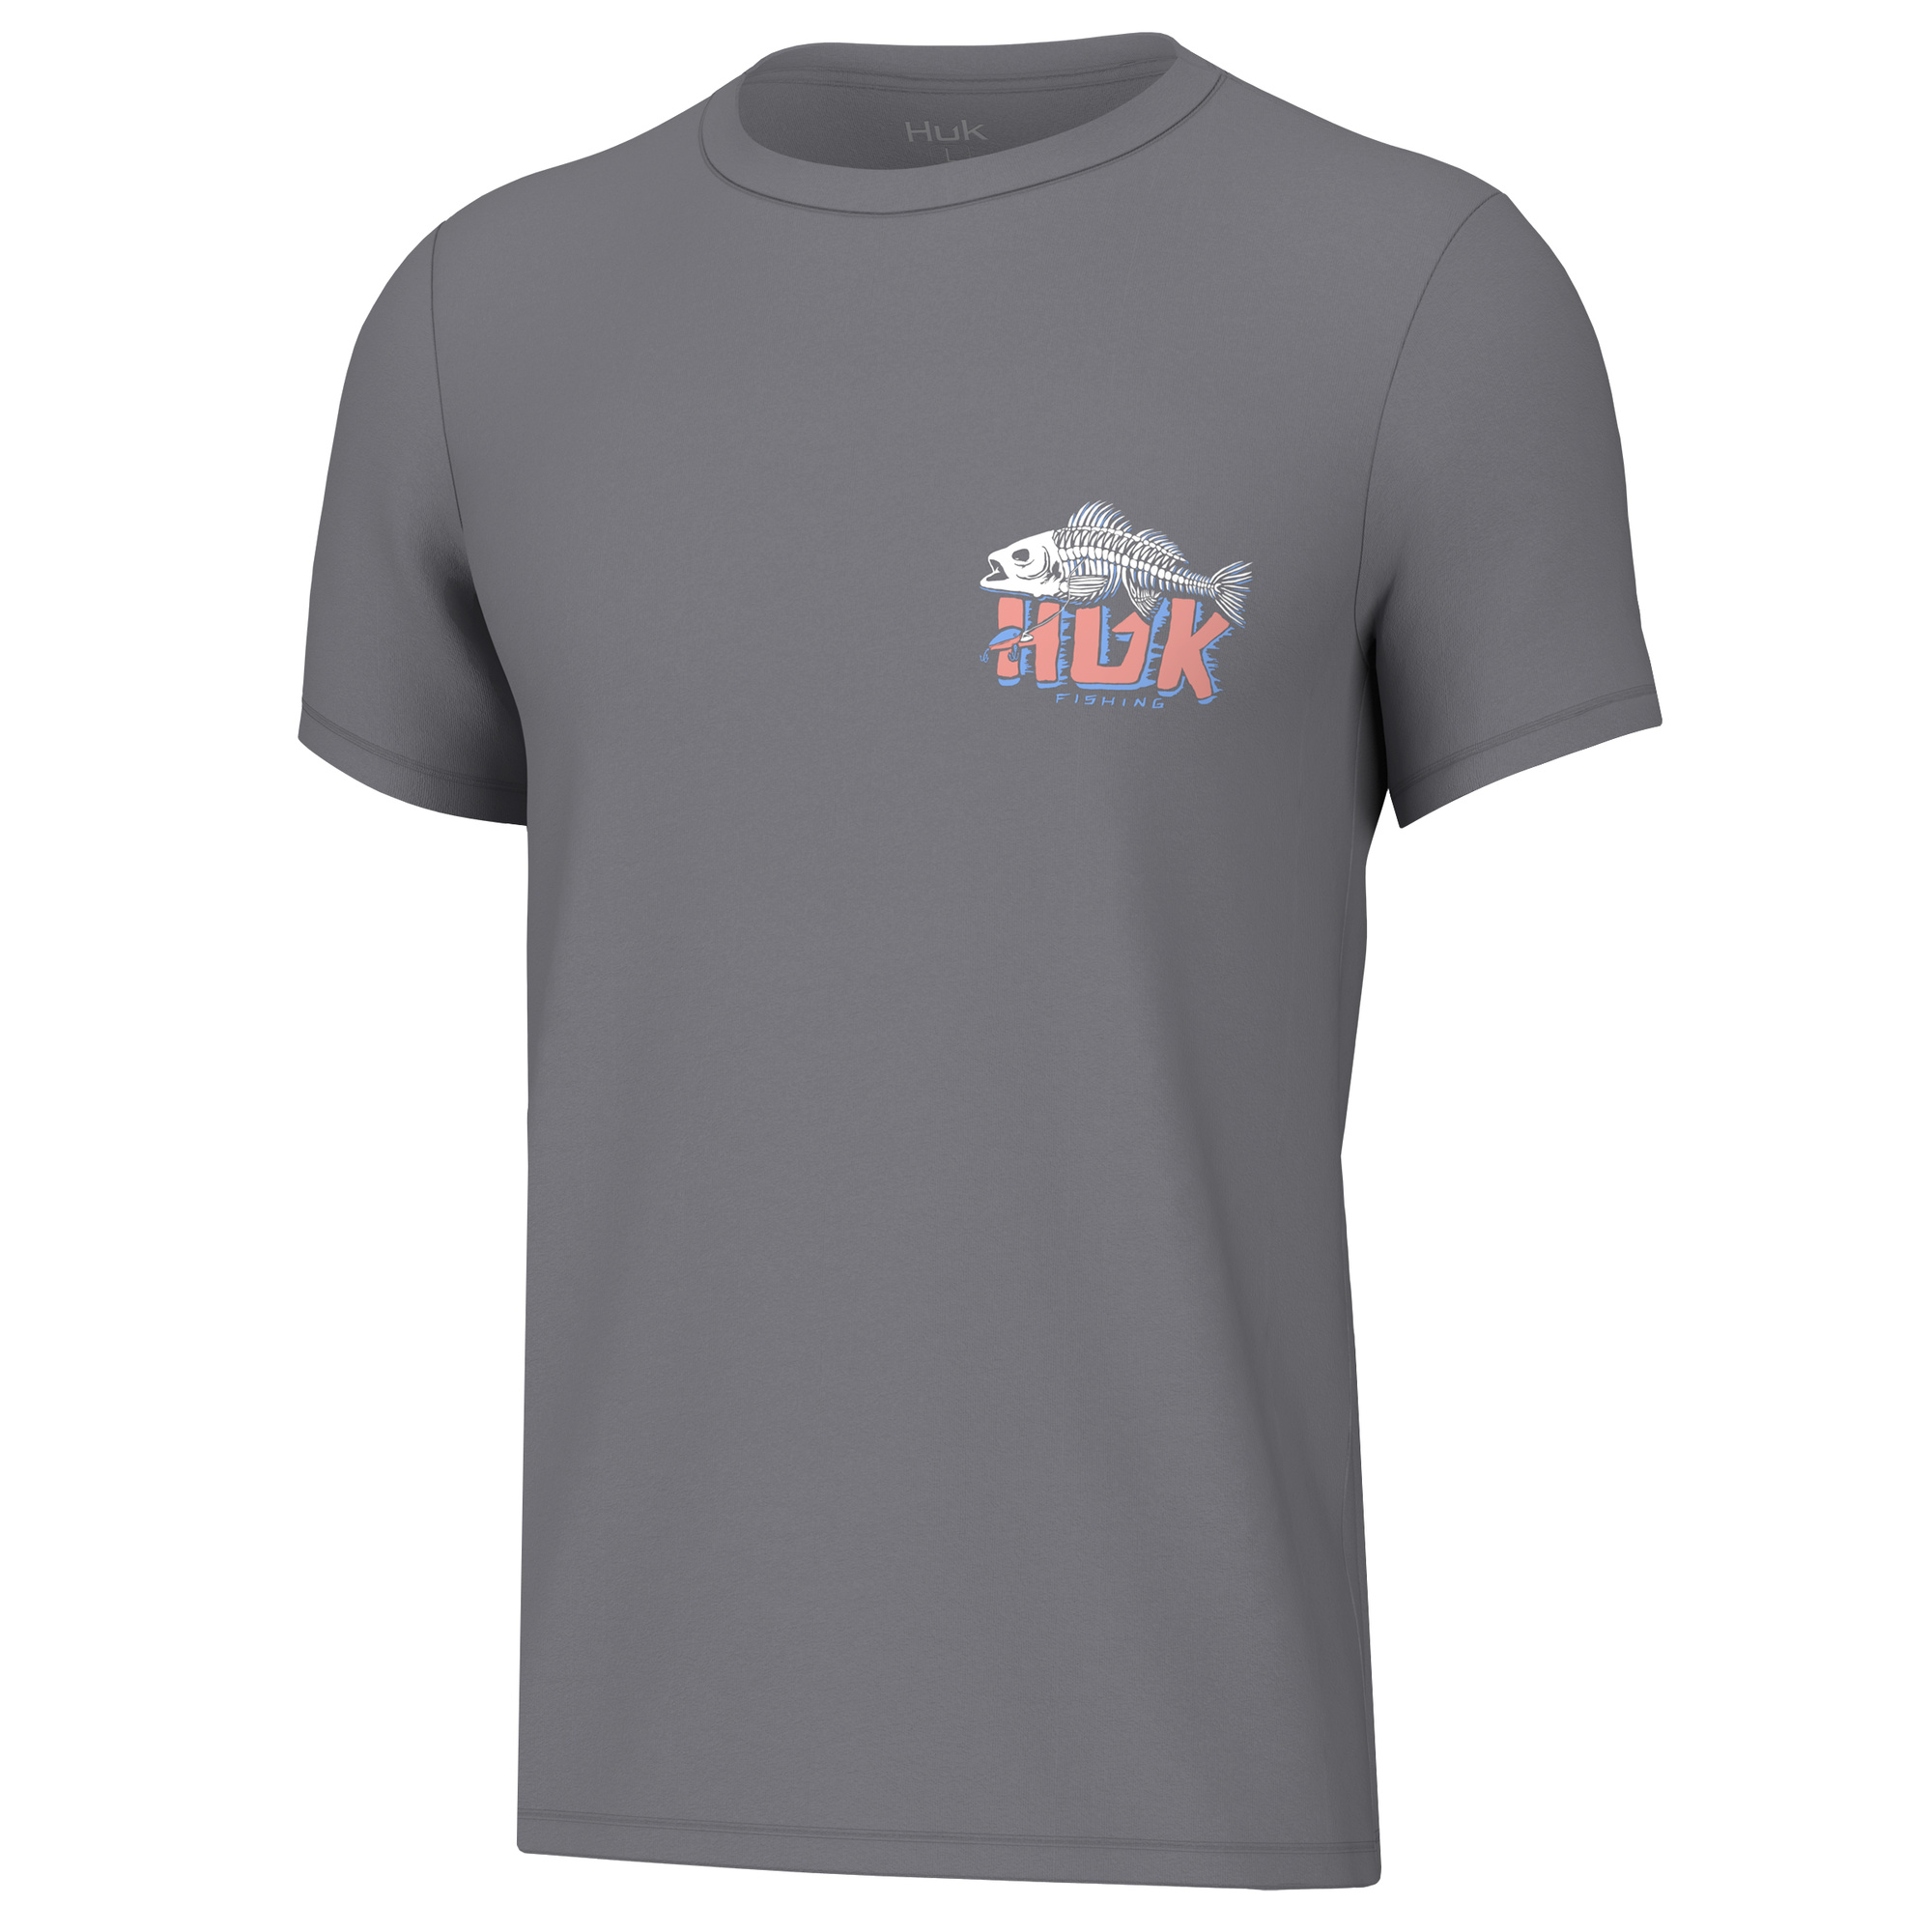 Huk Kids Logo Performance Fishing Hoodie | Black / yxs